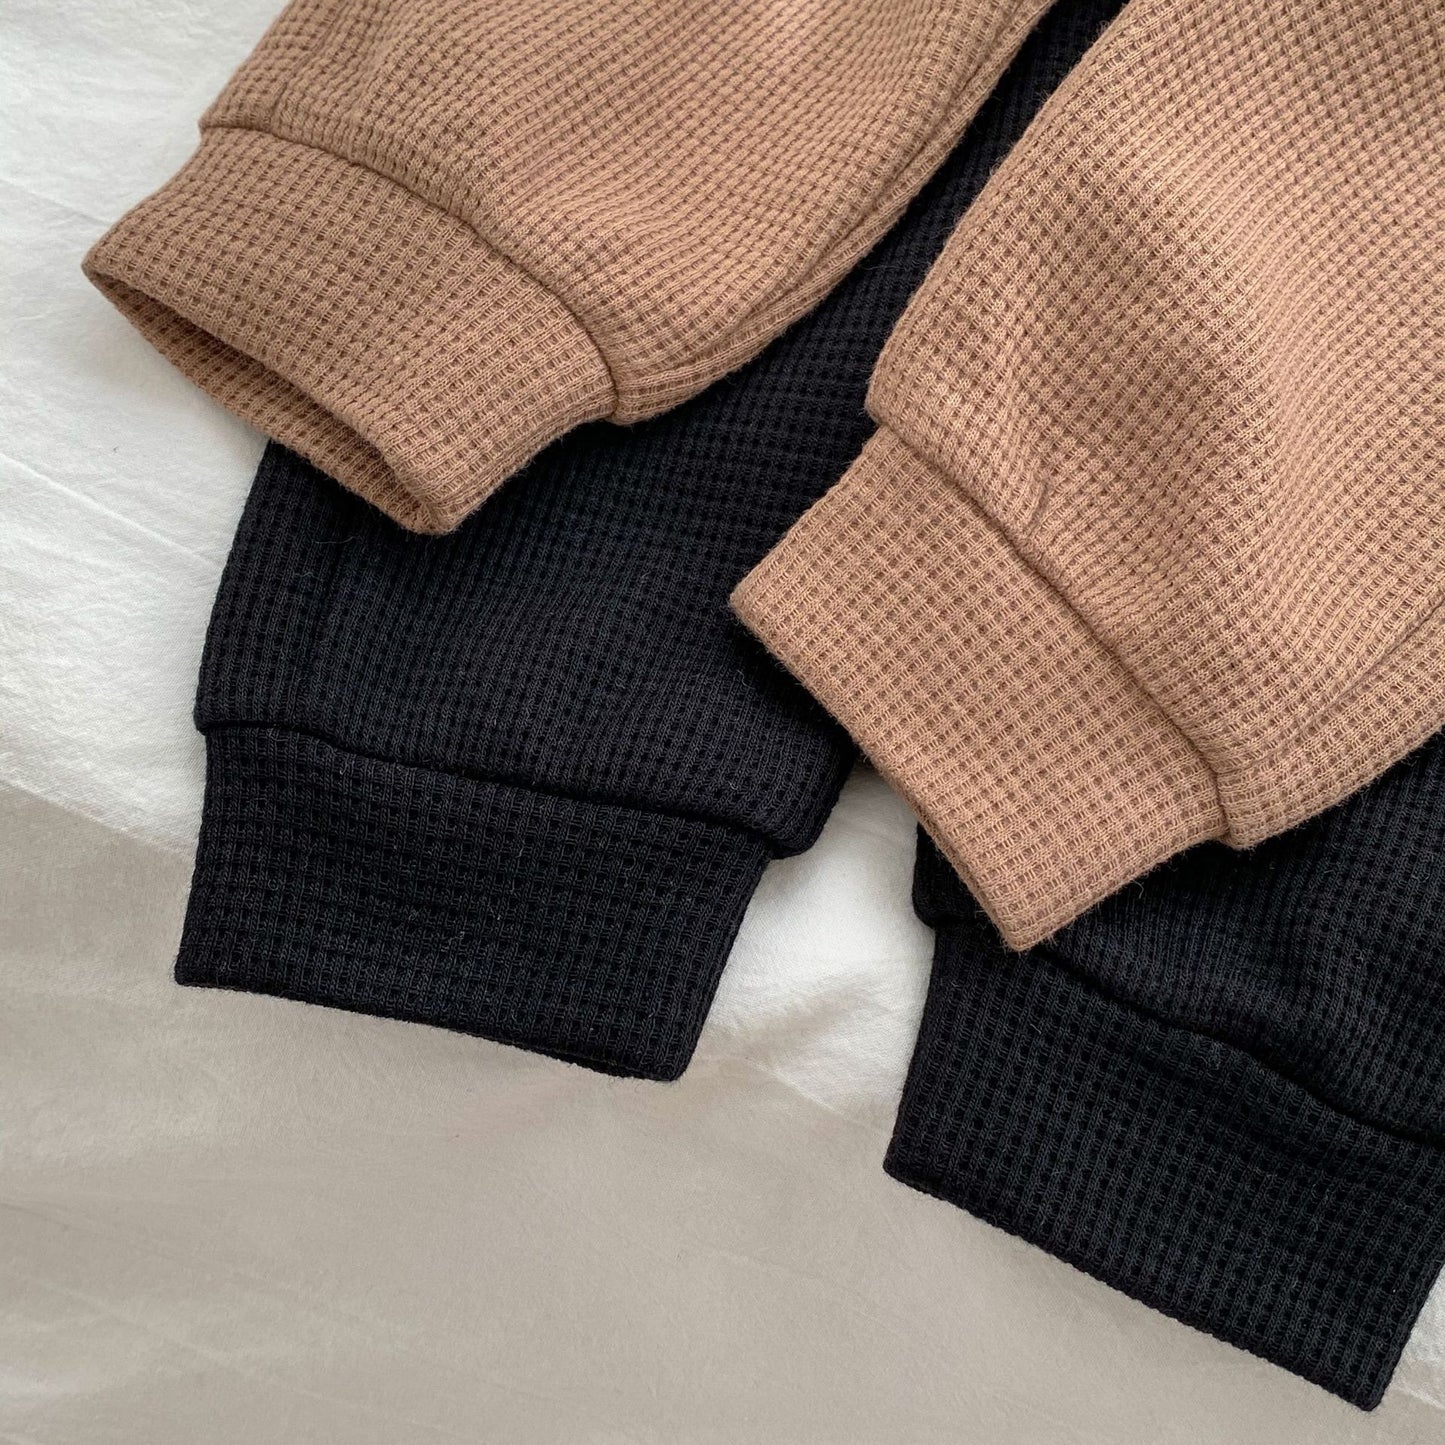 Baby Striped Pattern Waffle Fabric Hoodies Combo Pants Sets